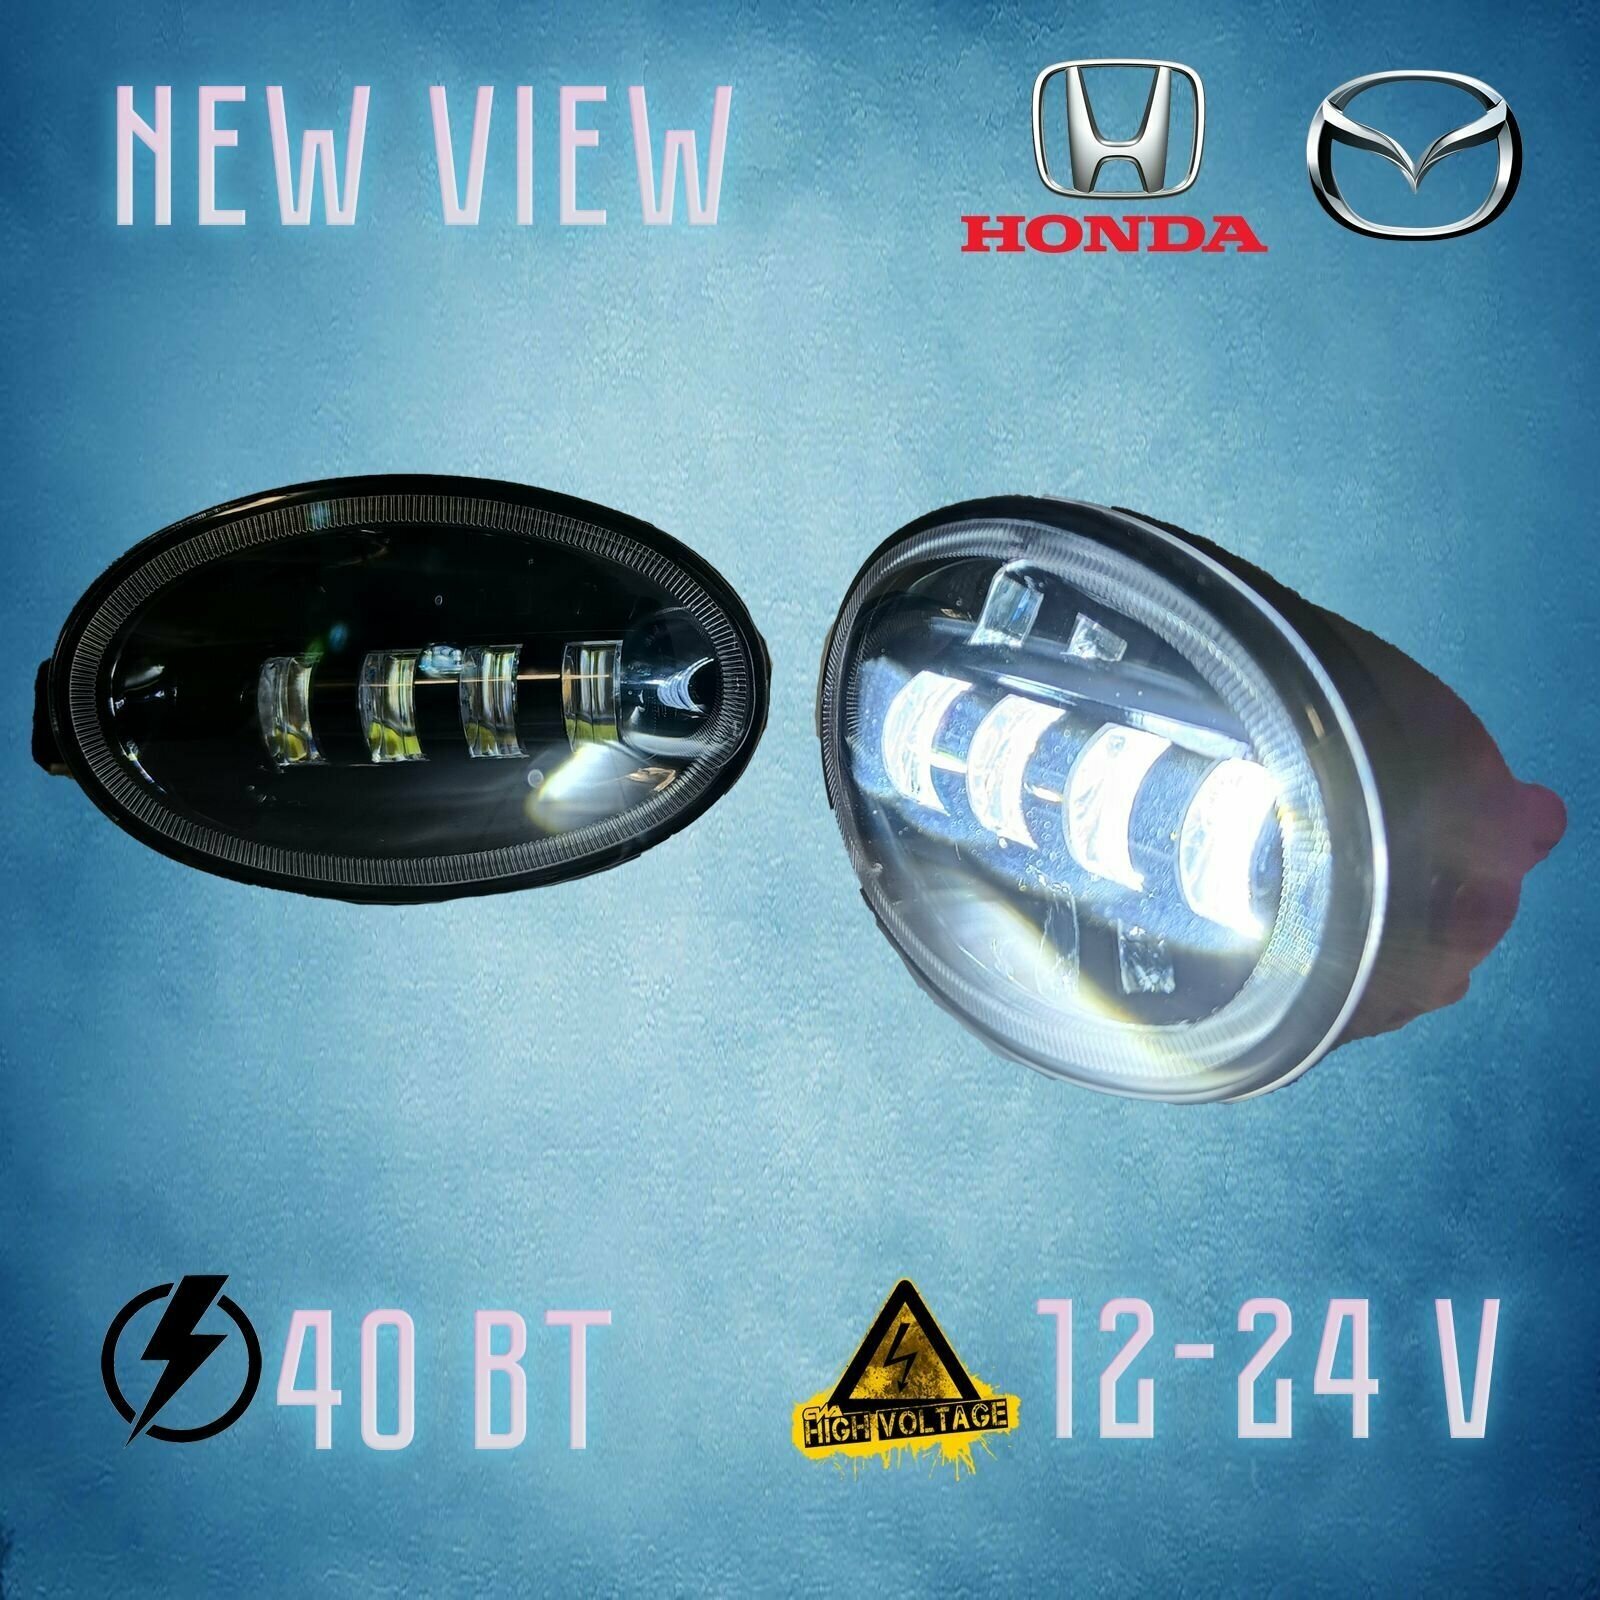 Светодиодные противотуманные фары LED на Хонда/Honda Мазда/Mazda. 40W . NEW VIEW.